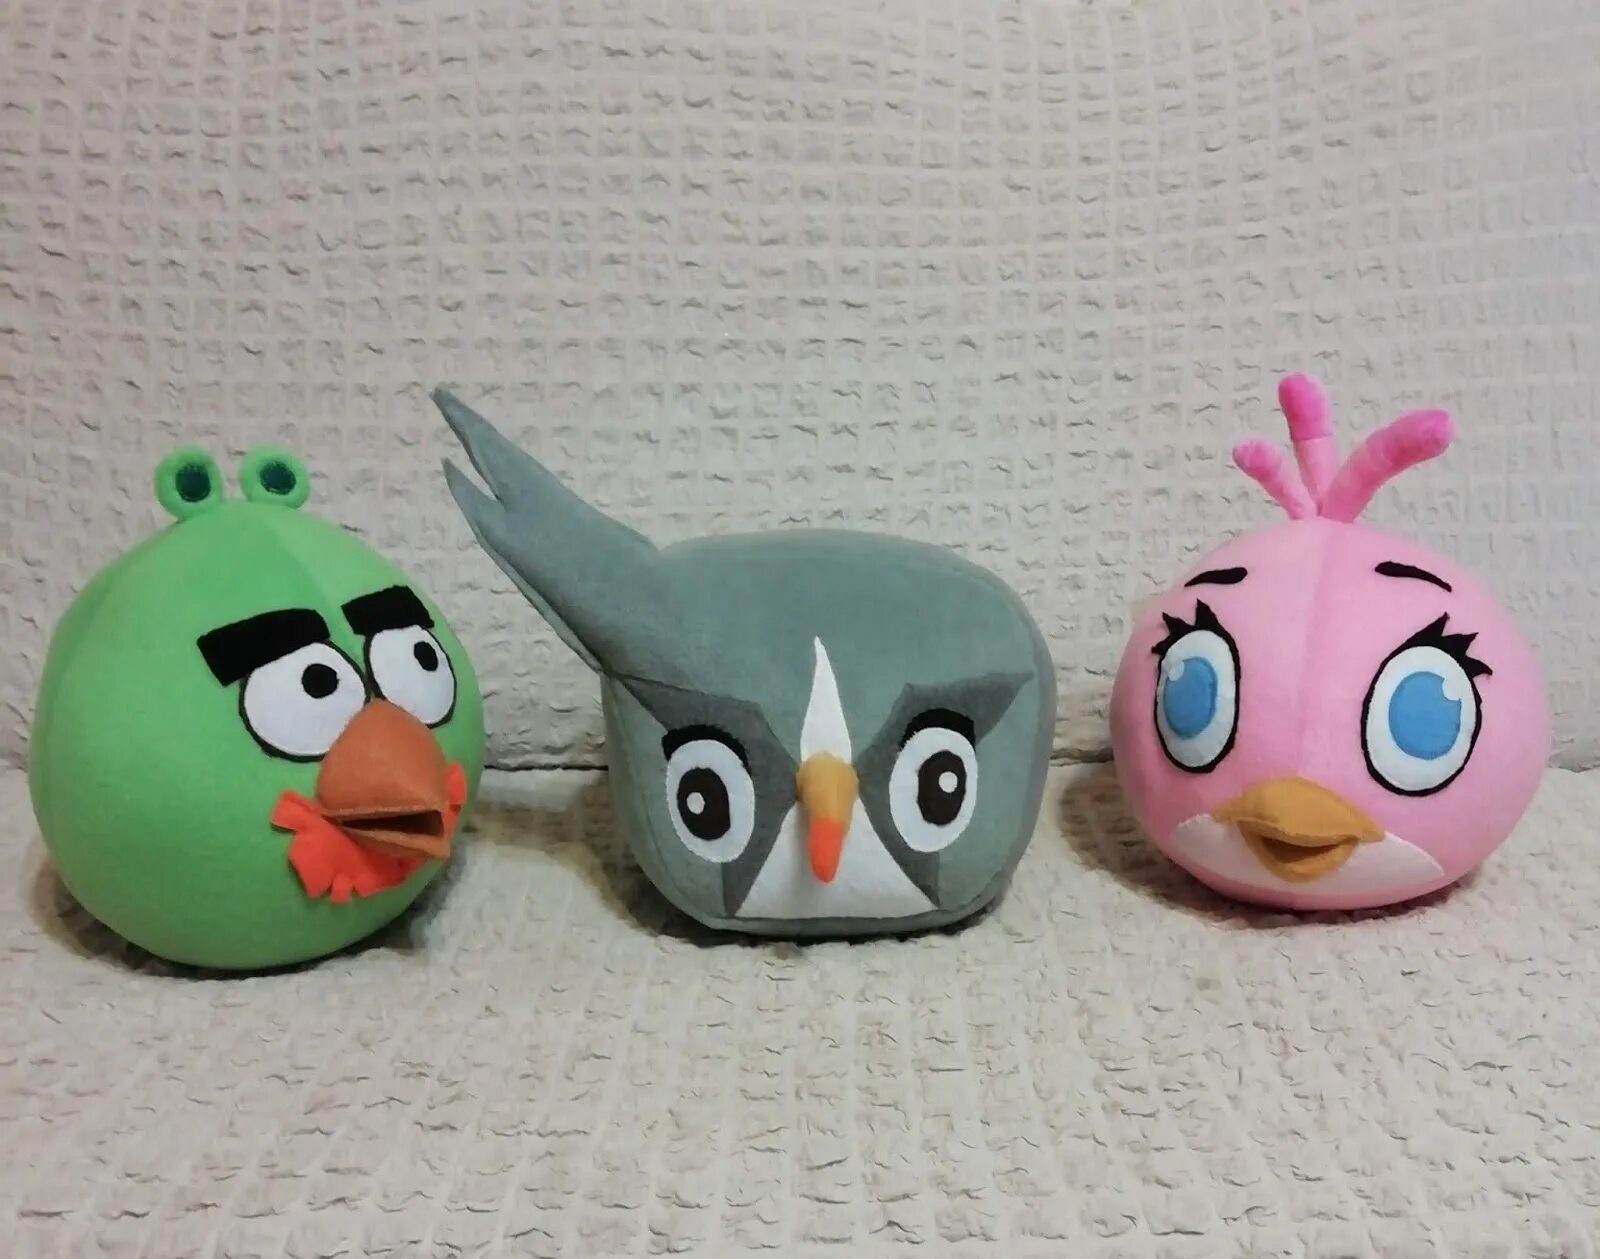 Angry birds store. Angry Birds плюшевые игрушки Теренс. Игрушки Angry Birds Сильвер. Теренс Энгри бердз мягкая игрушка. Angry Birds 2 Серебрянка.